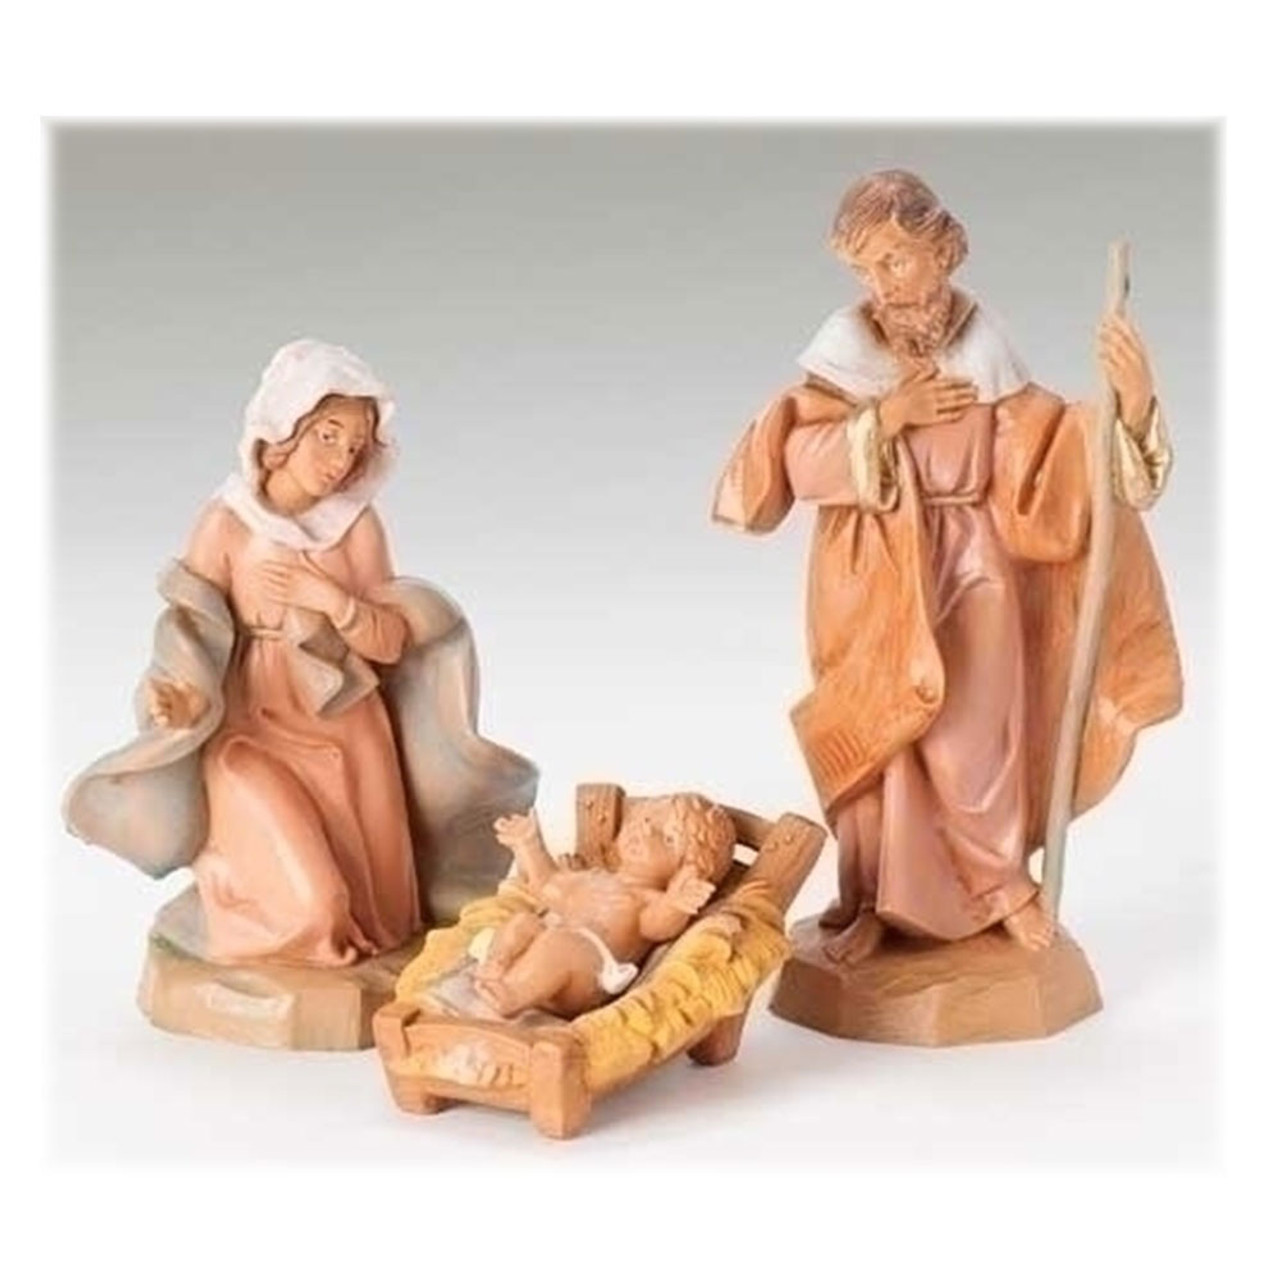 5" Scale Fontanini Holy Family Nativity Figures